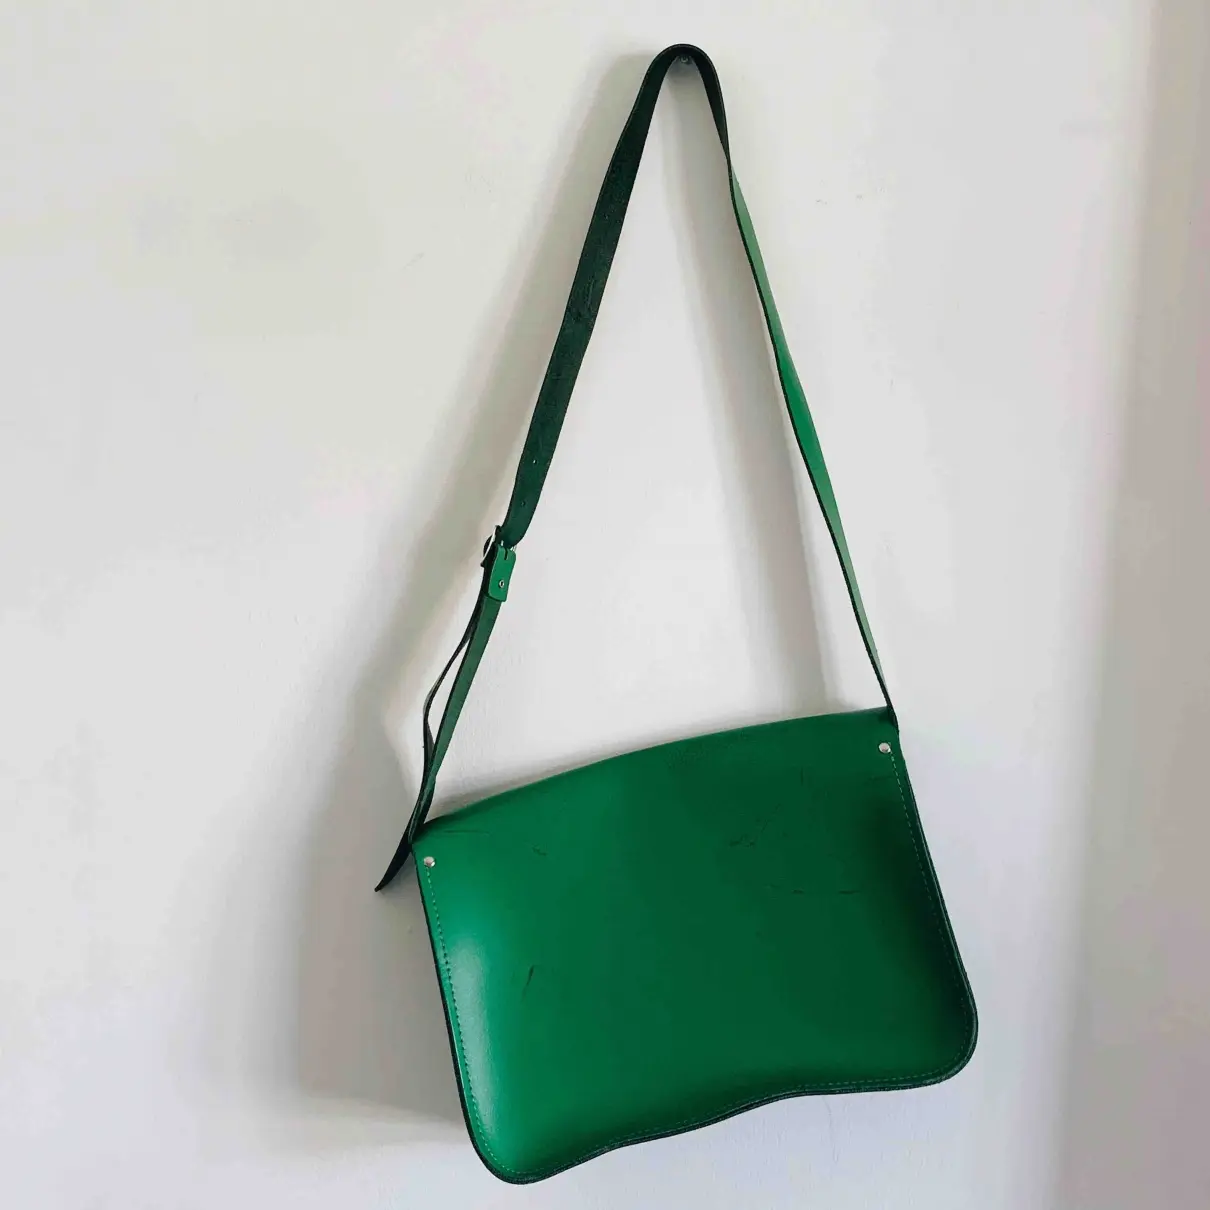 Buy Cambridge Satchel Company Leather satchel online